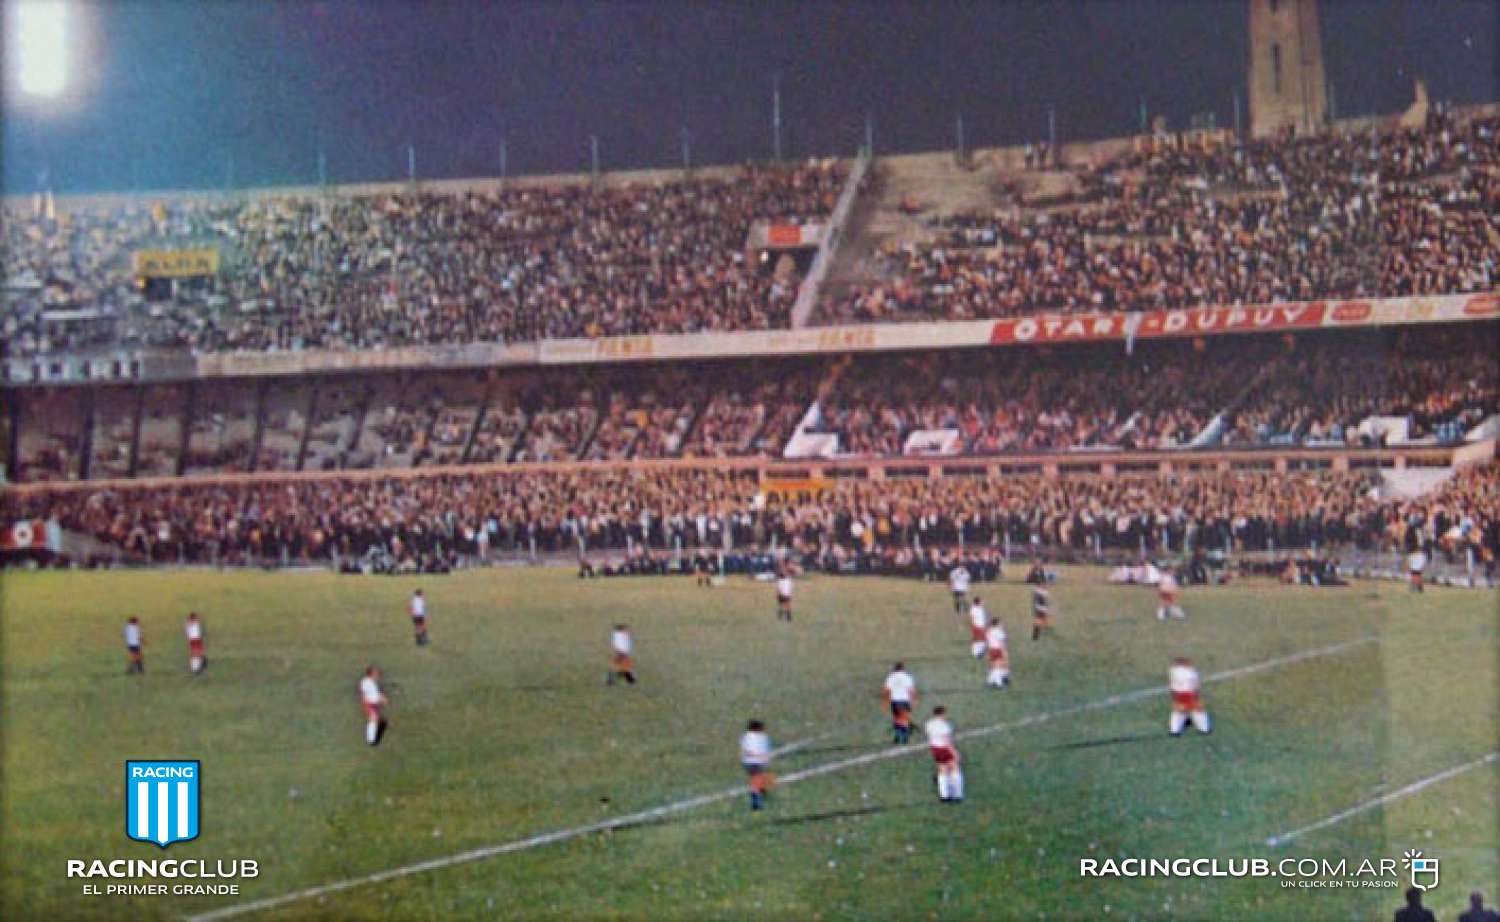 Presidente Perón Stadium | Racing Club - Official website